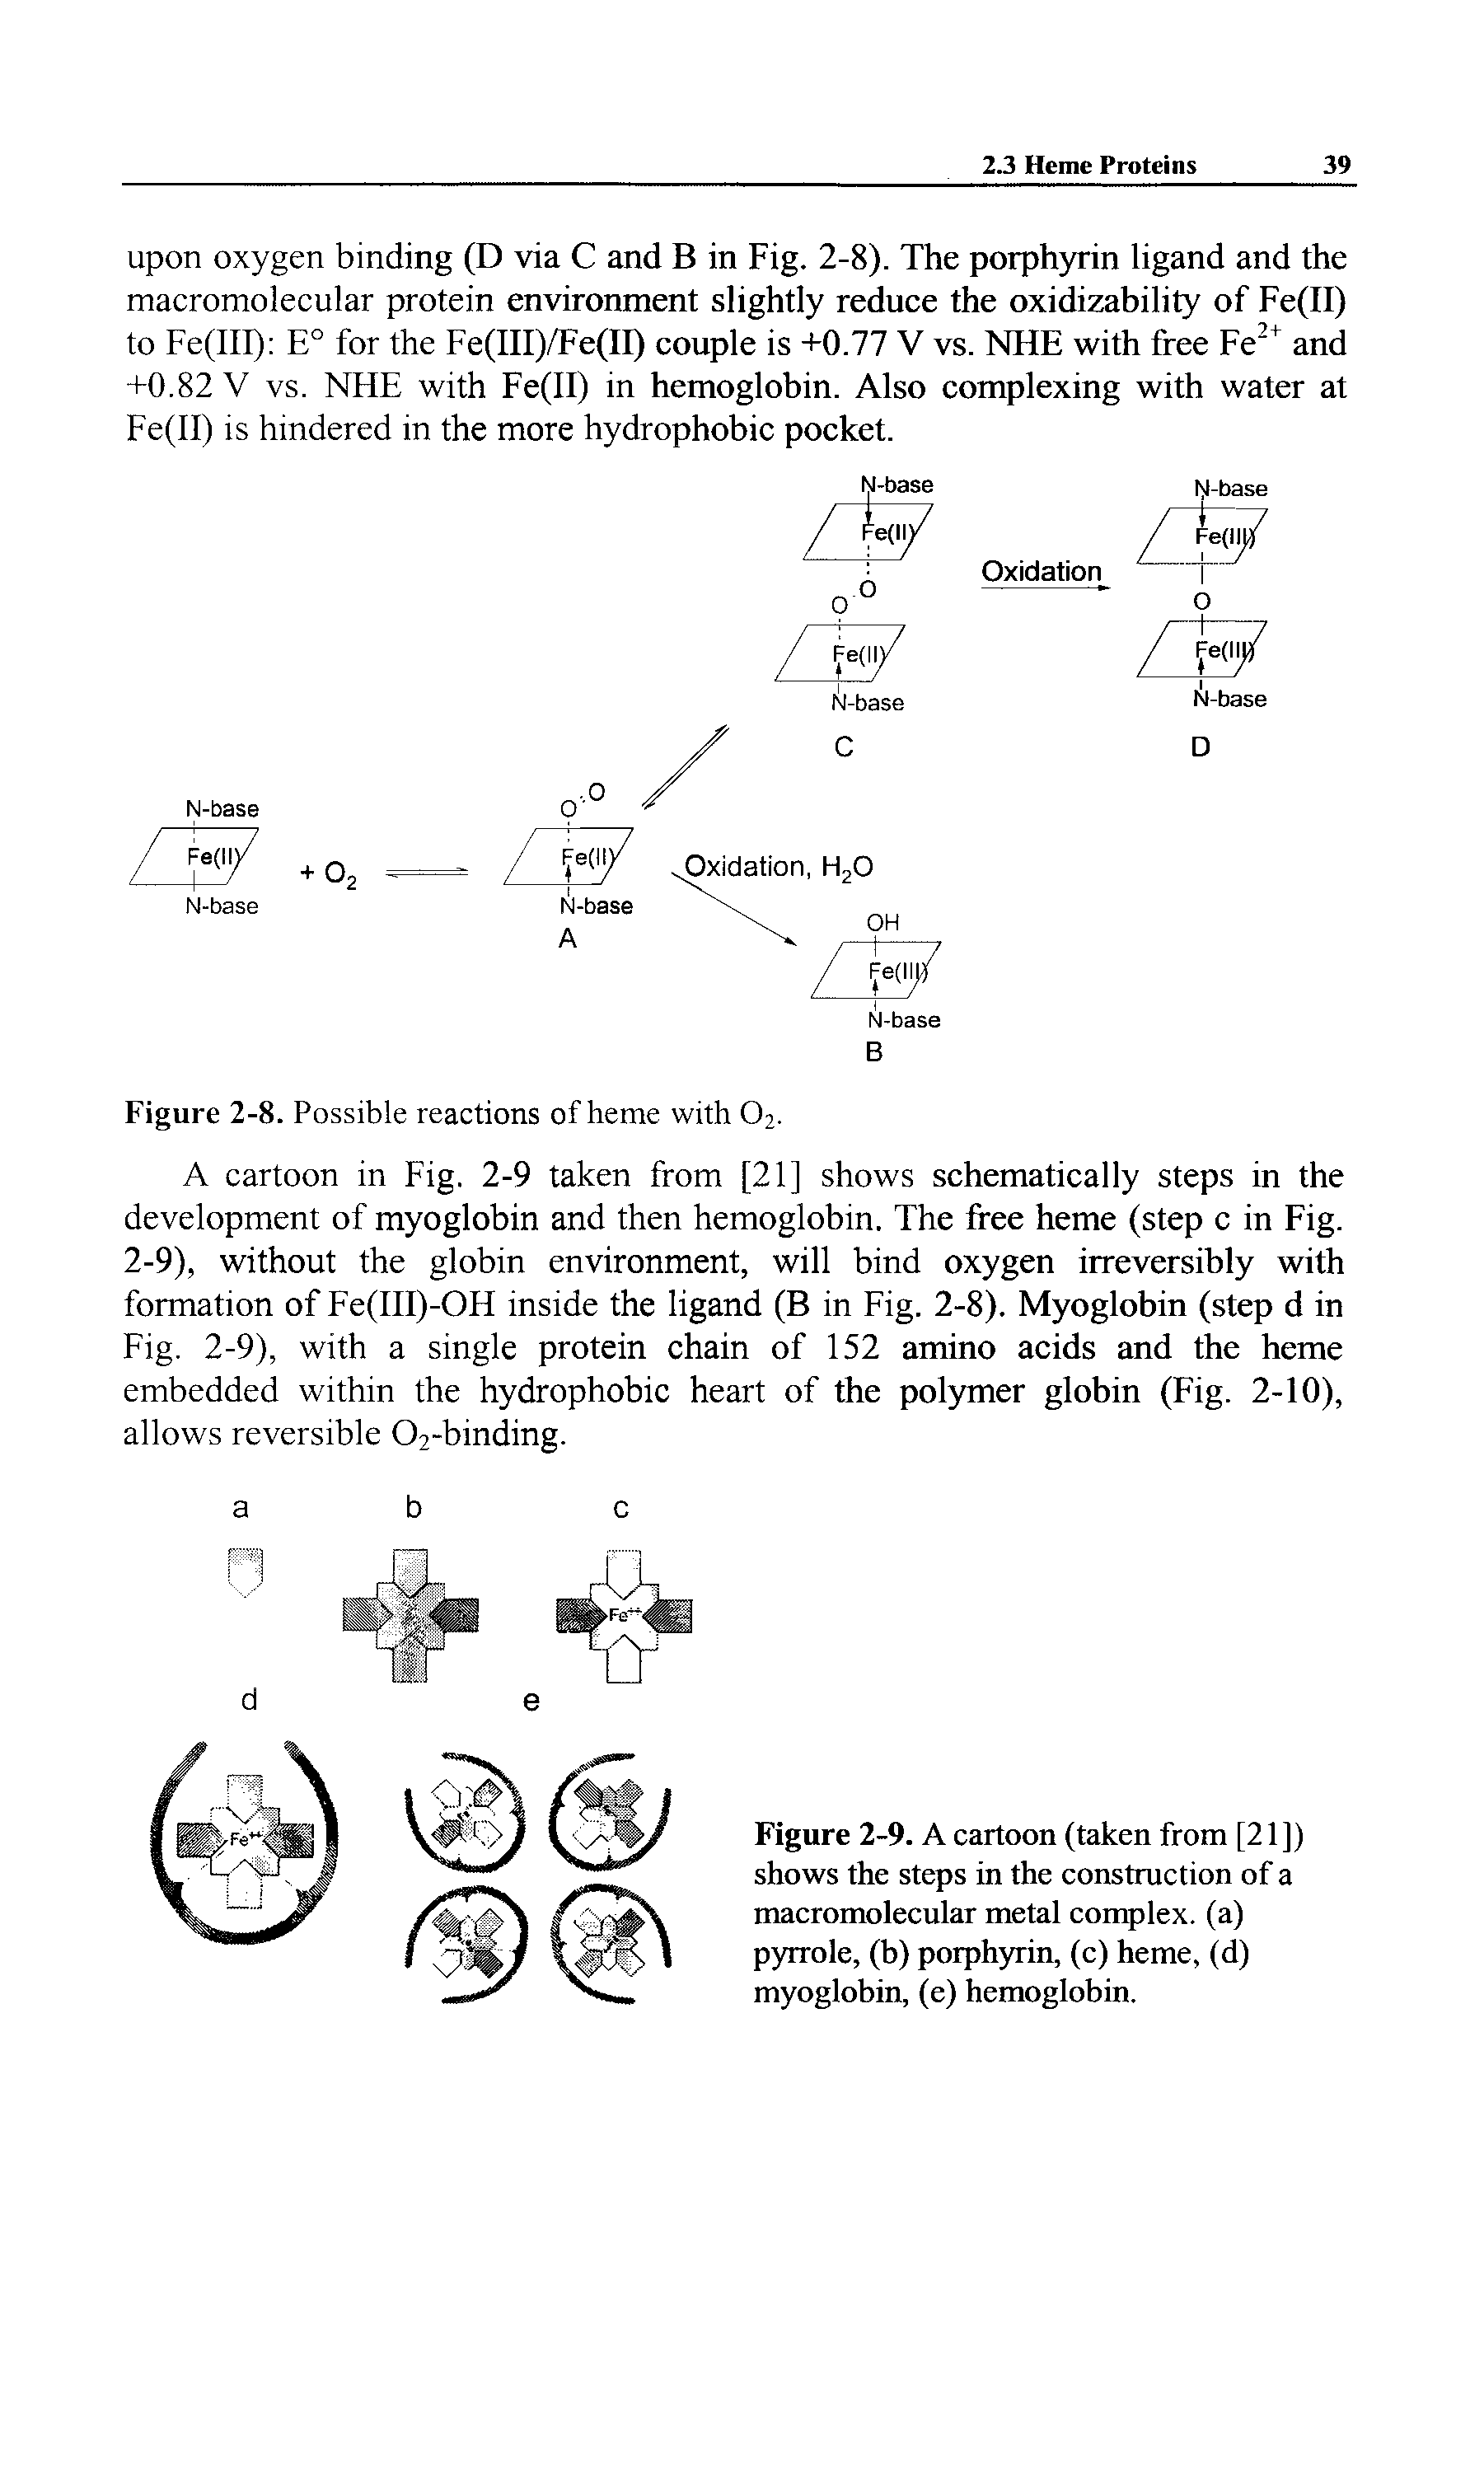 Figure 2-9. A cartoon (taken from [21]) shows the steps in the construction of a macromolecular metal complex, (a) pyrrole, (b) porphyrin, (e) heme, (d) myoglobin, (e) hemoglobin.